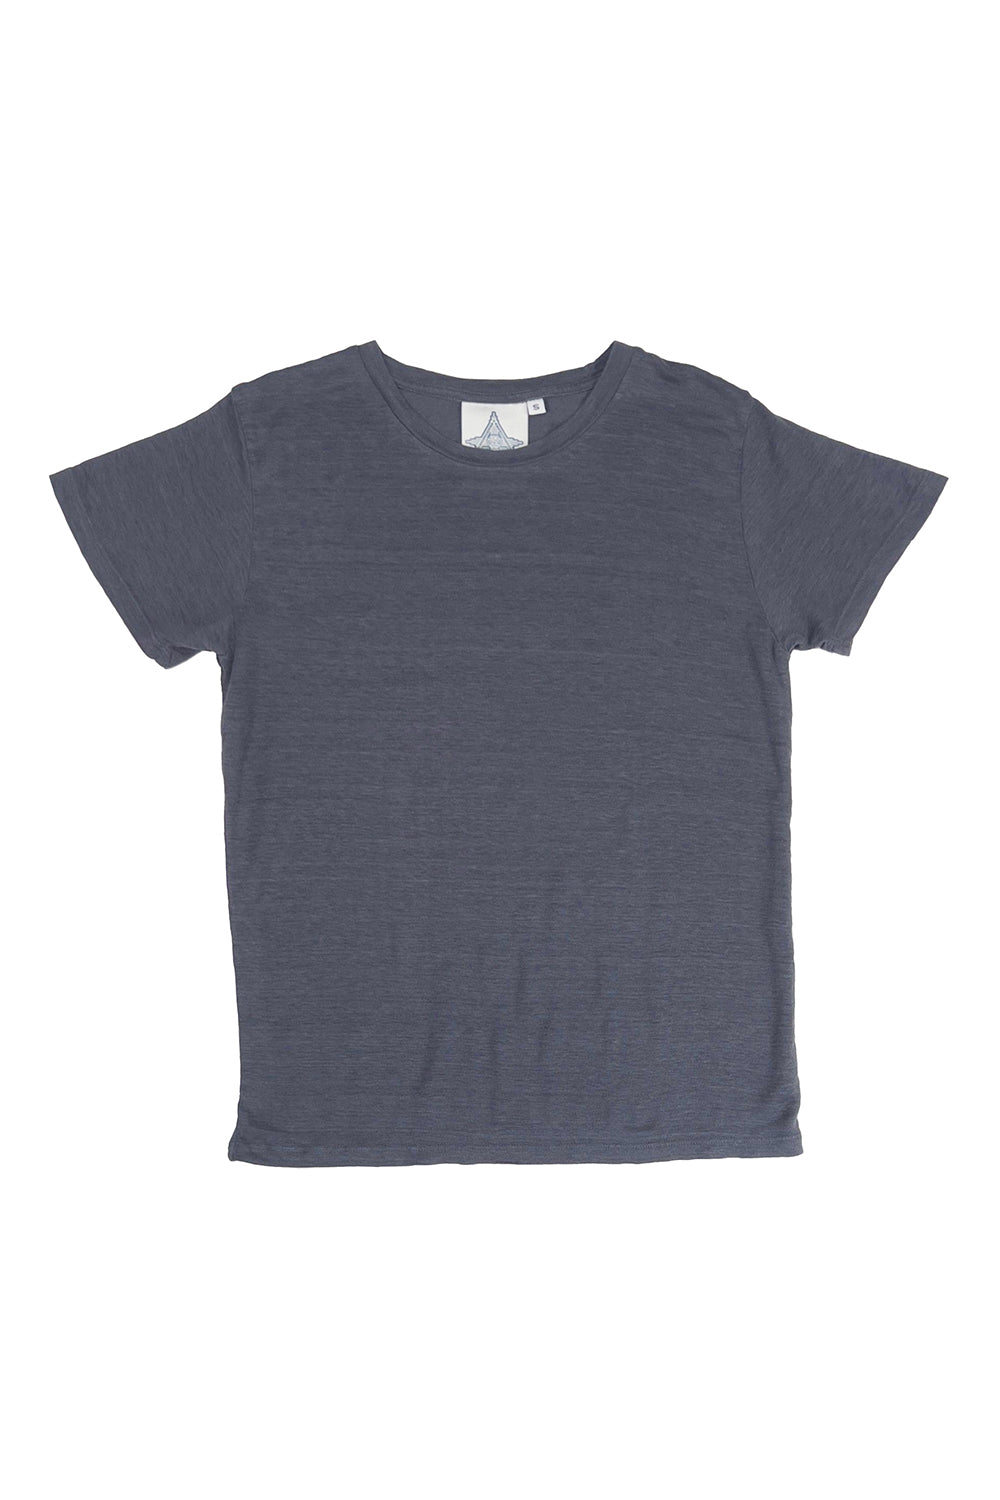 Madison 100% Hemp Tee | Jungmaven Hemp Clothing & Accessories / Color: Diesel Gray